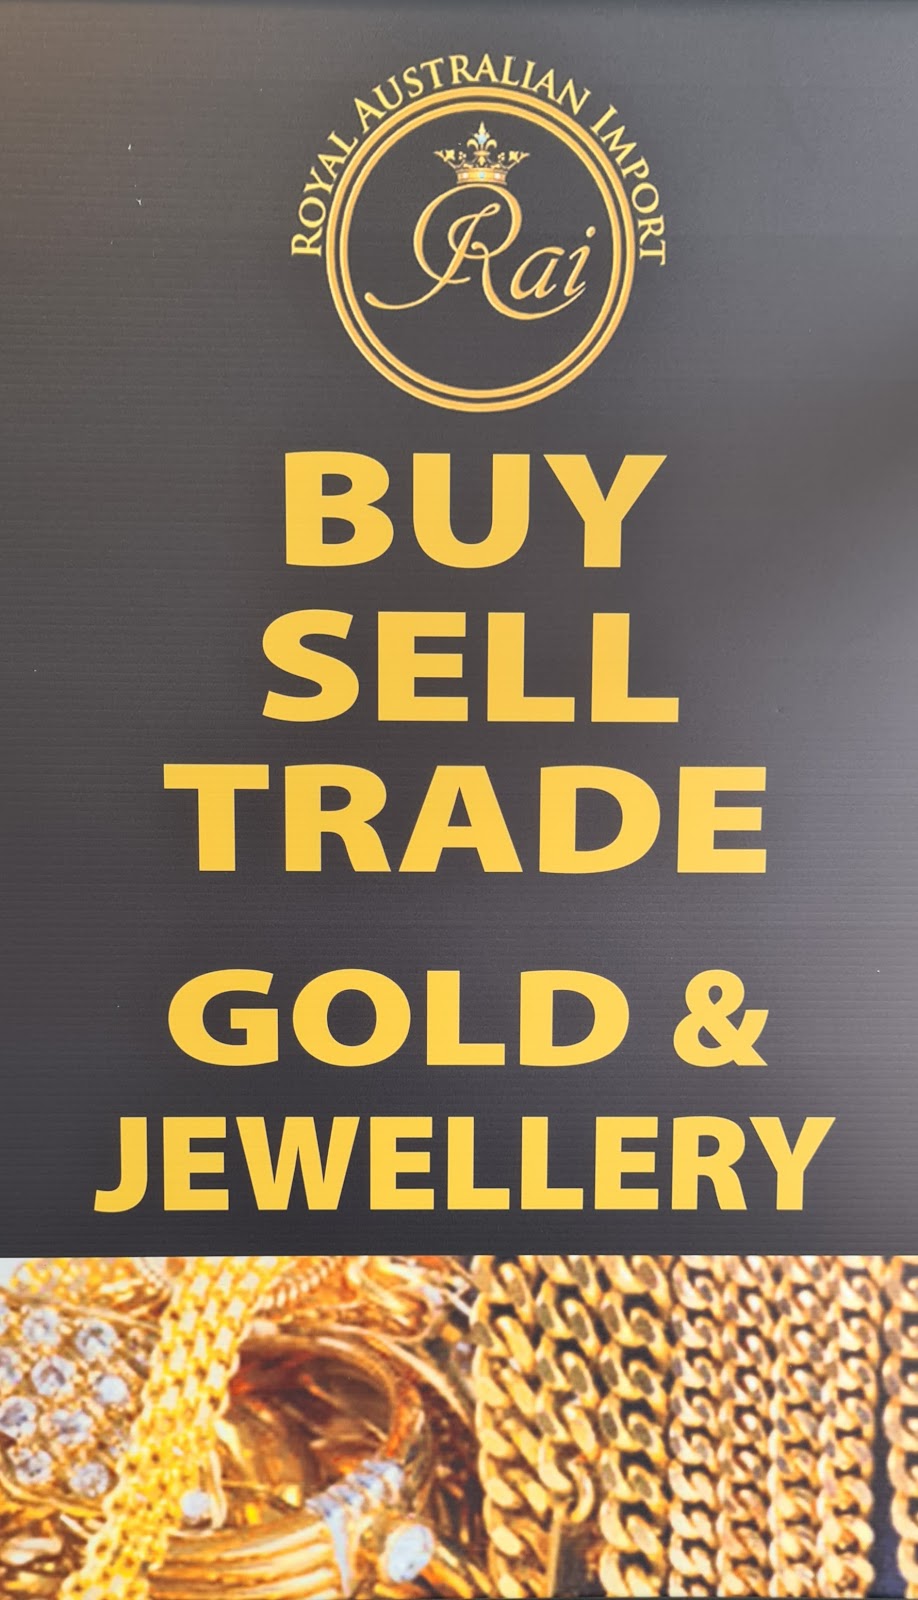 Rai Jewellery | jewelry store | 69 York St, Beenleigh QLD 4207, Australia | 0422588882 OR +61 422 588 882